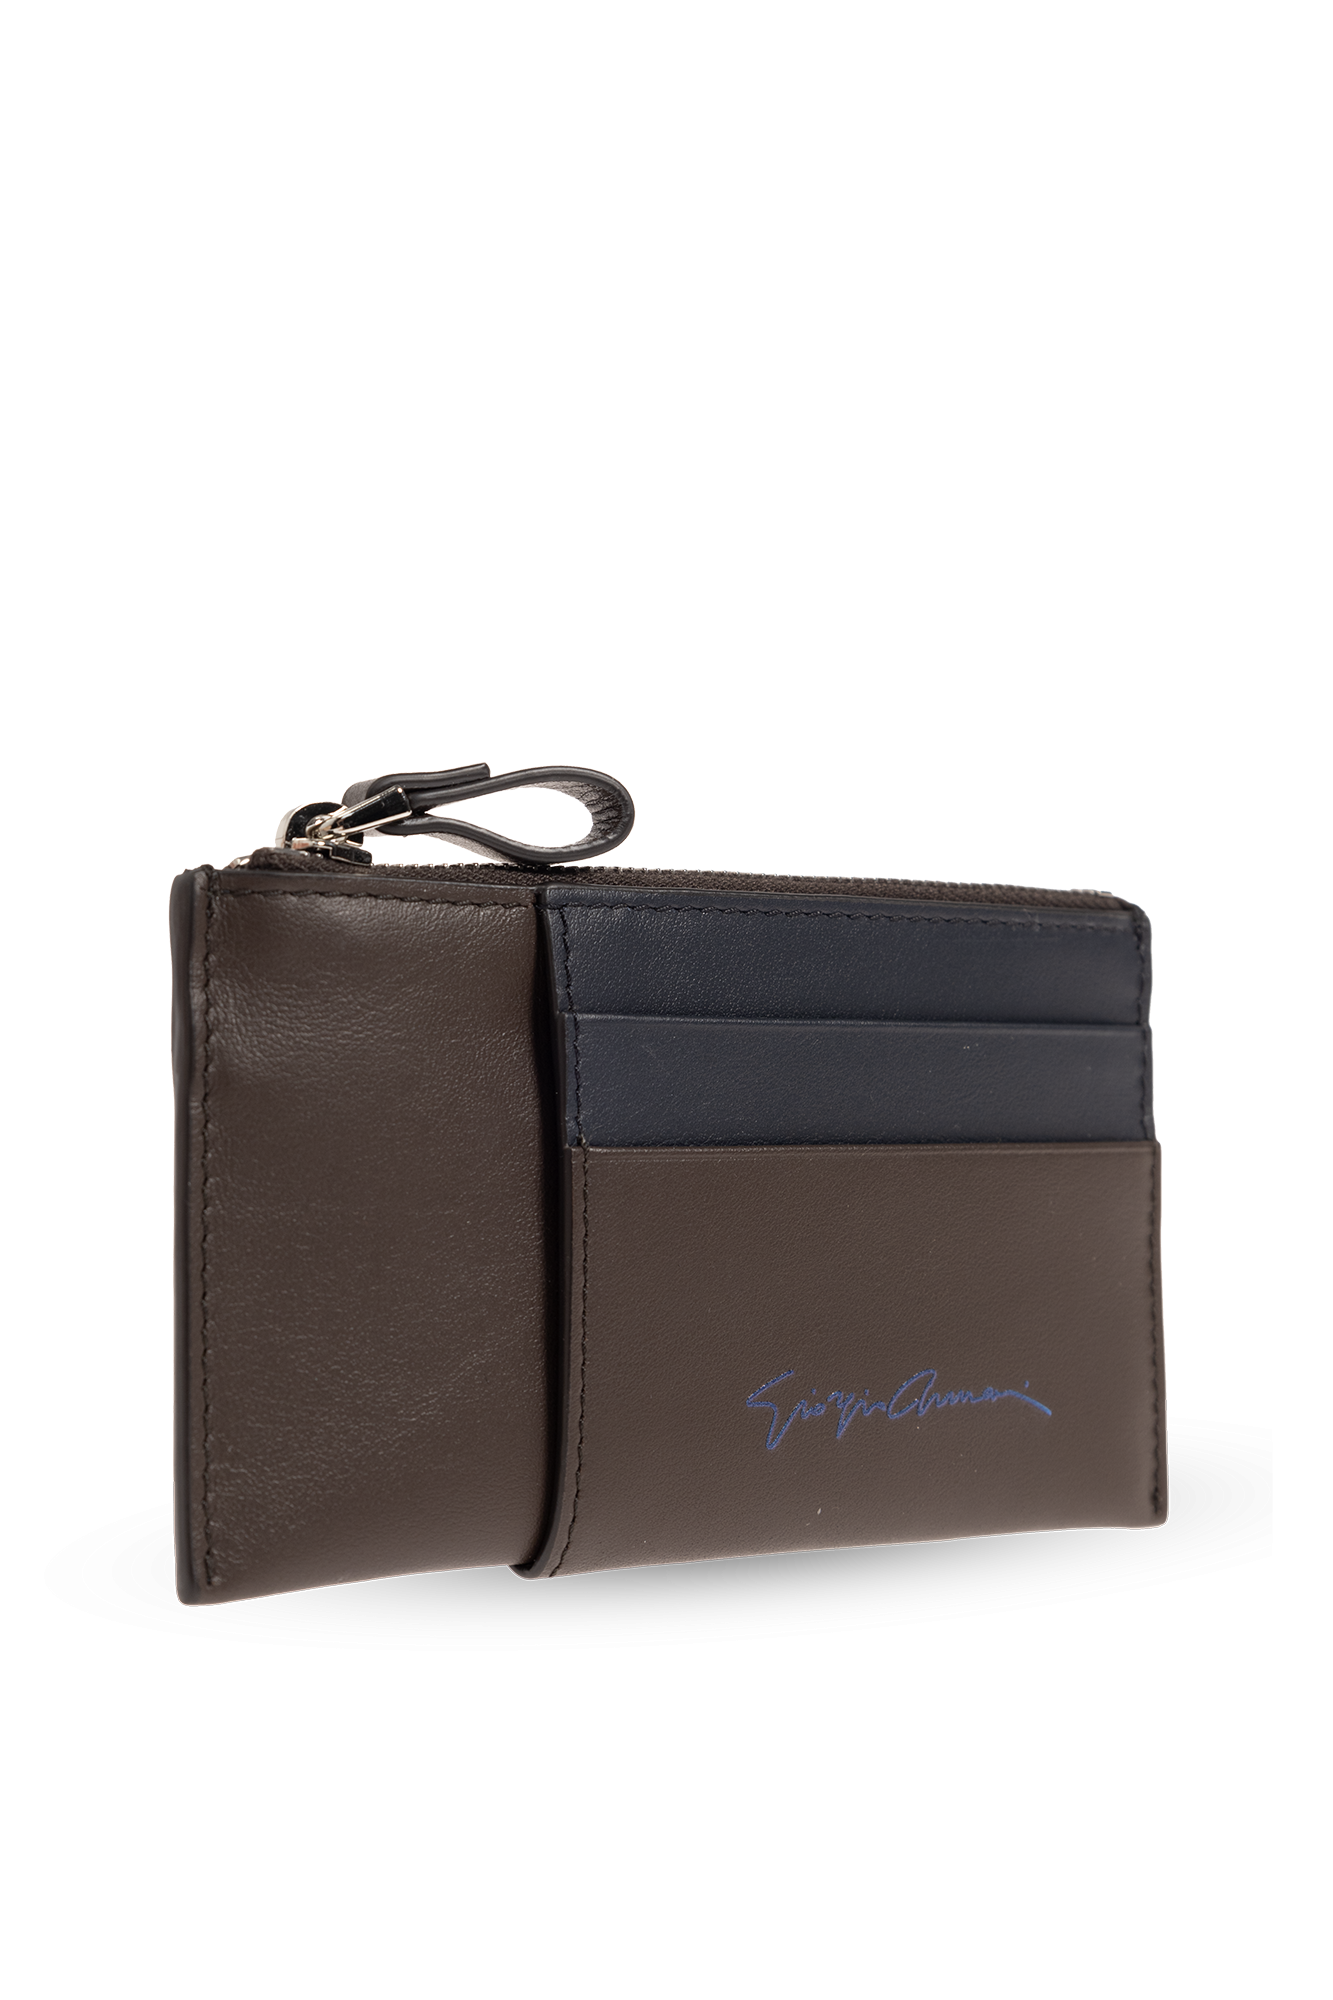 Giorgio n639 armani Leather wallet with keyring